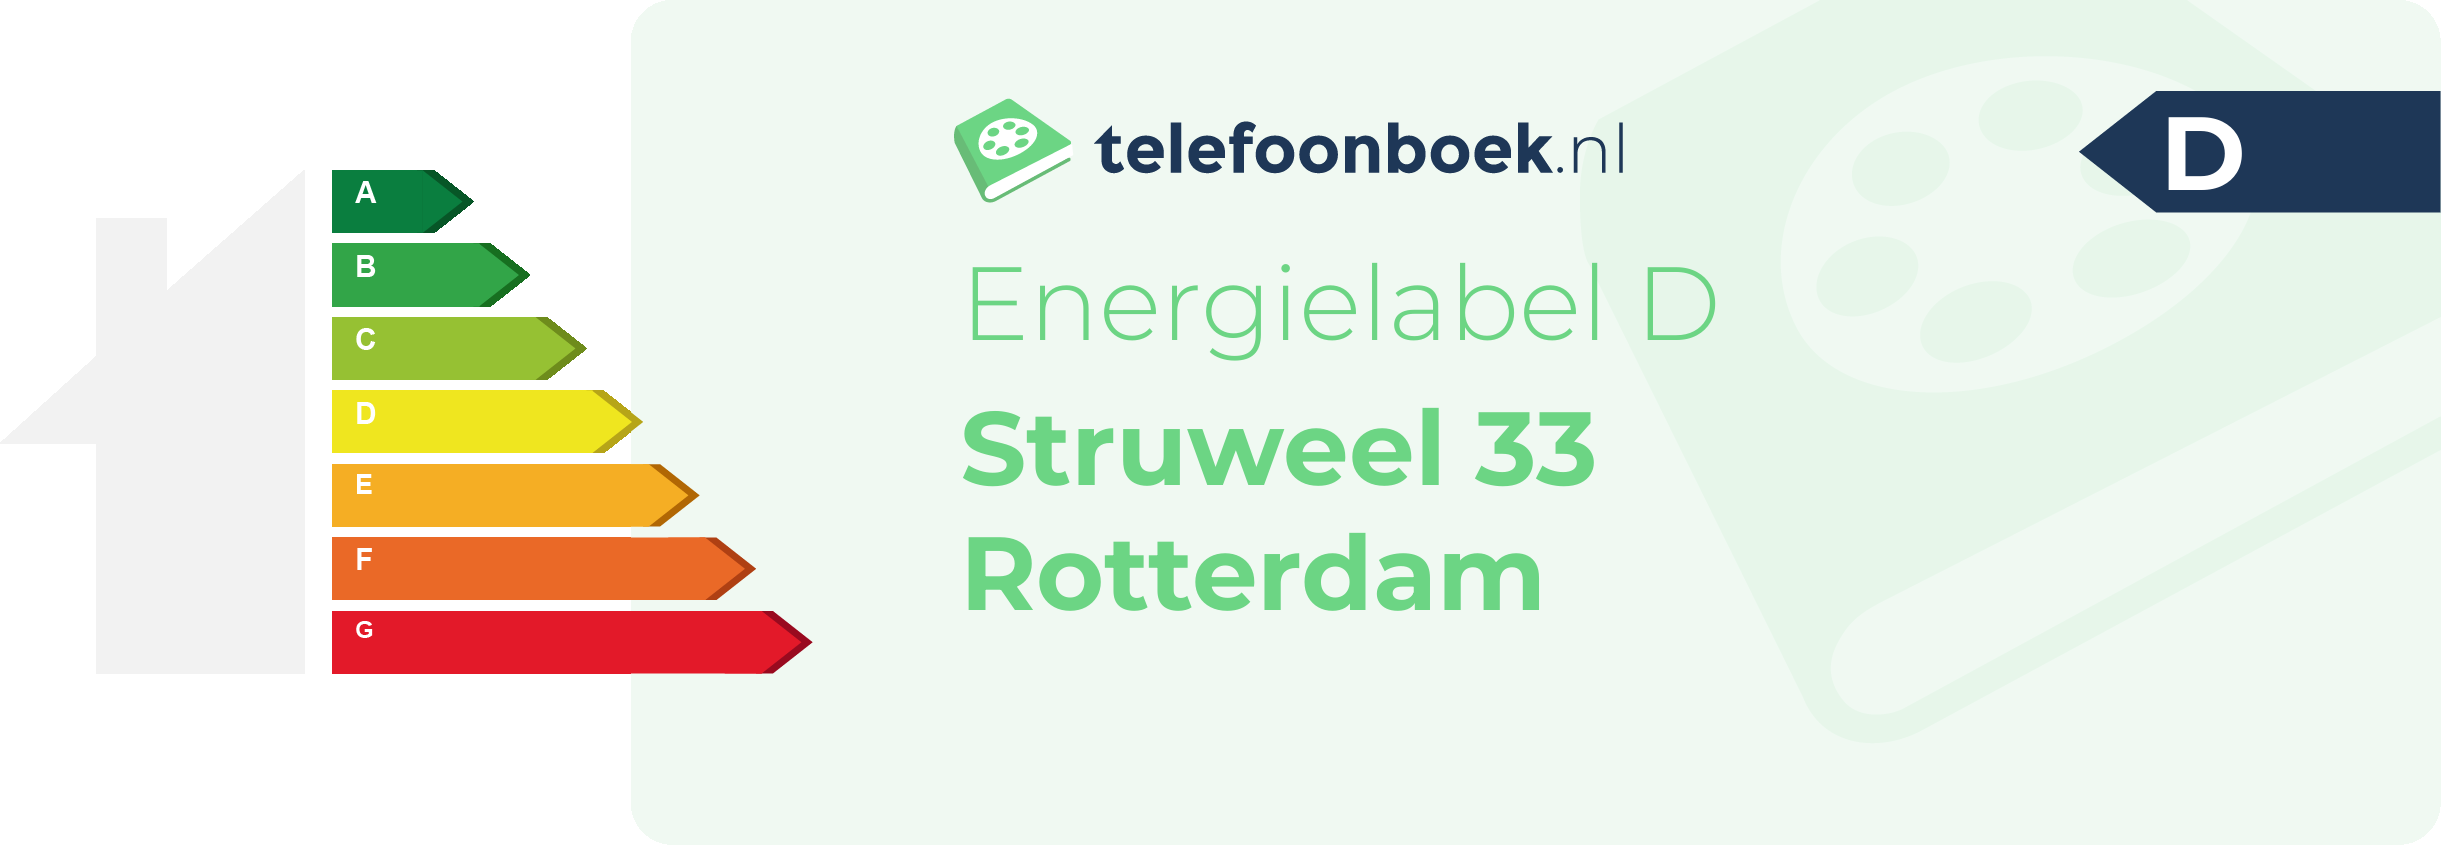 Energielabel Struweel 33 Rotterdam